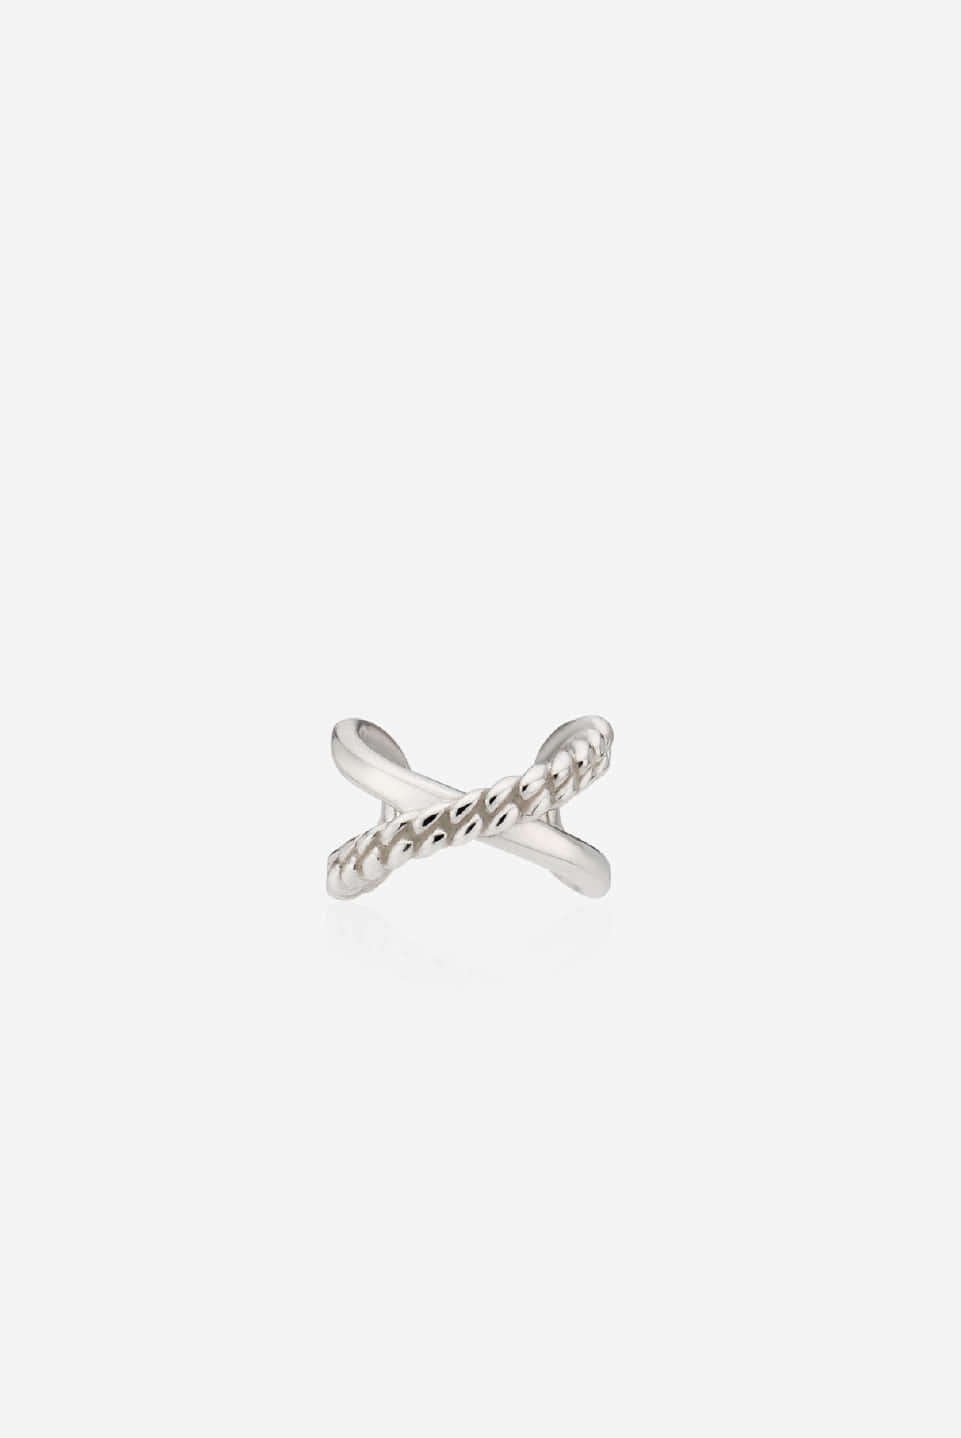 X Knot Chain Ear cuff in Silver